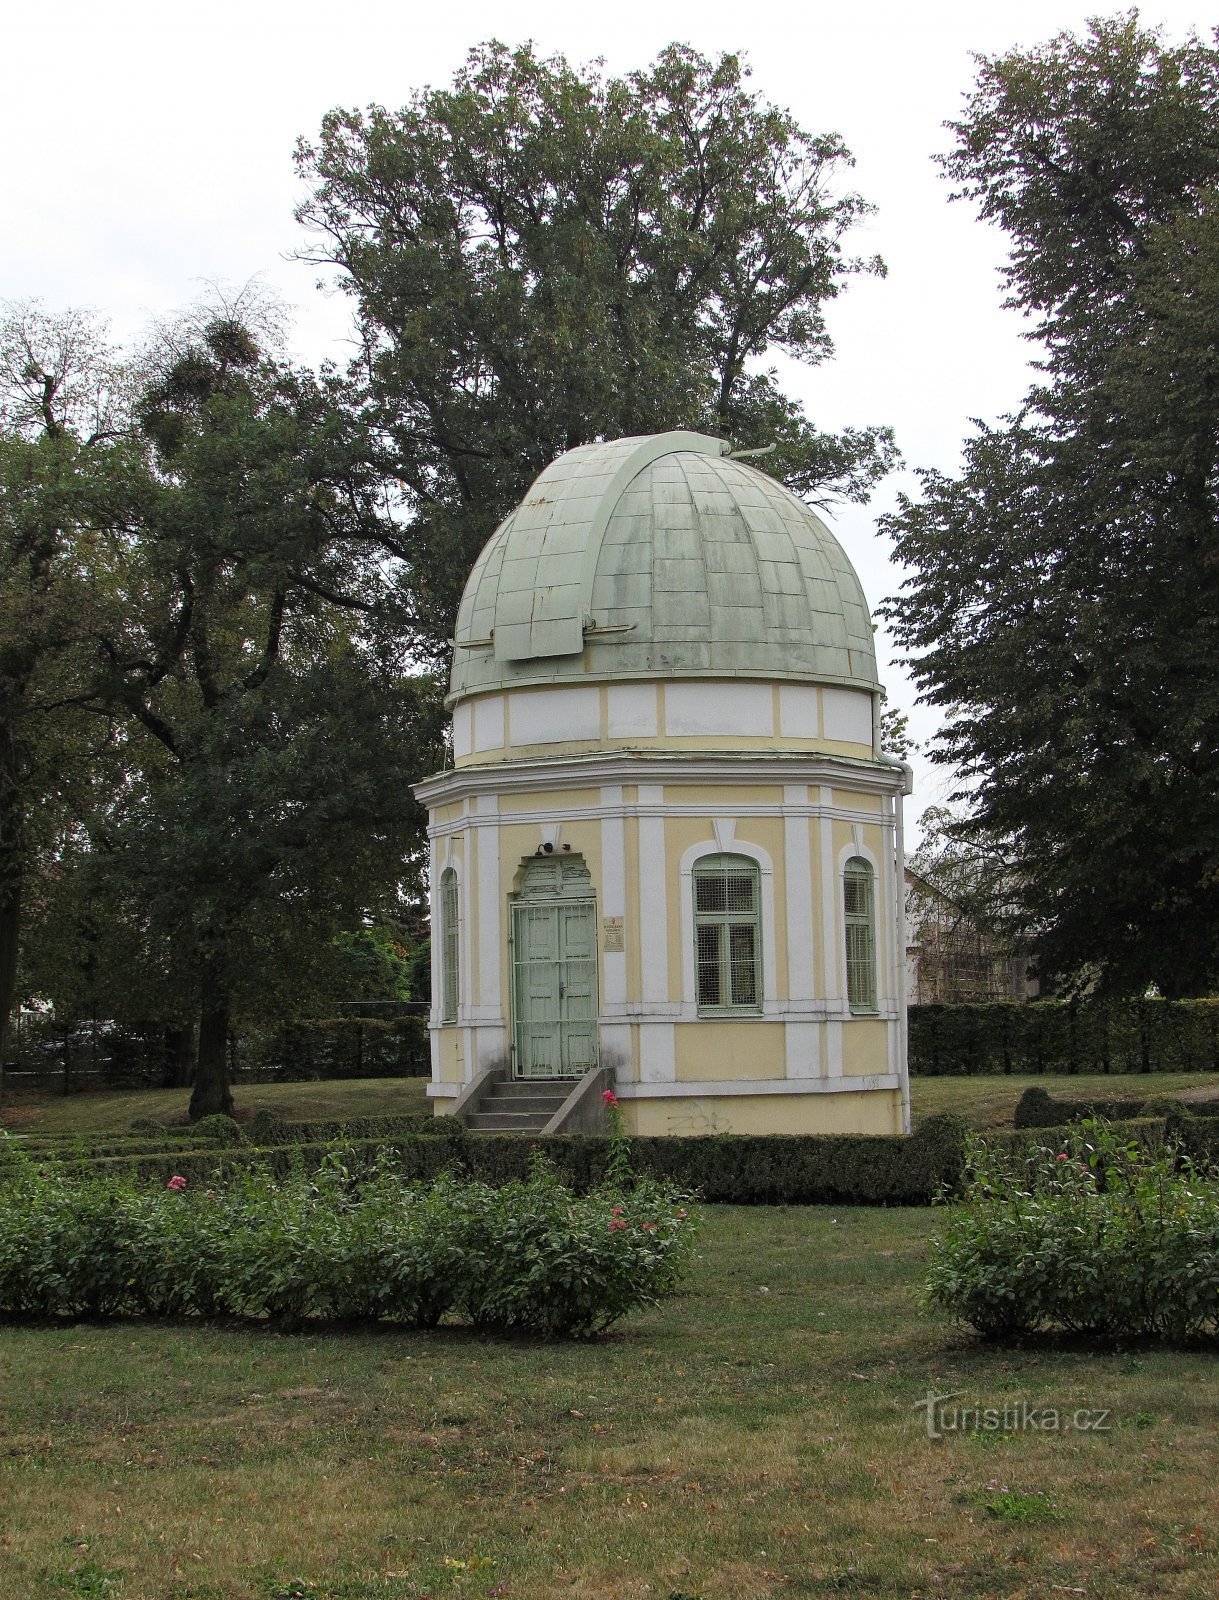 Holešov - monument voor de componist en observatorium